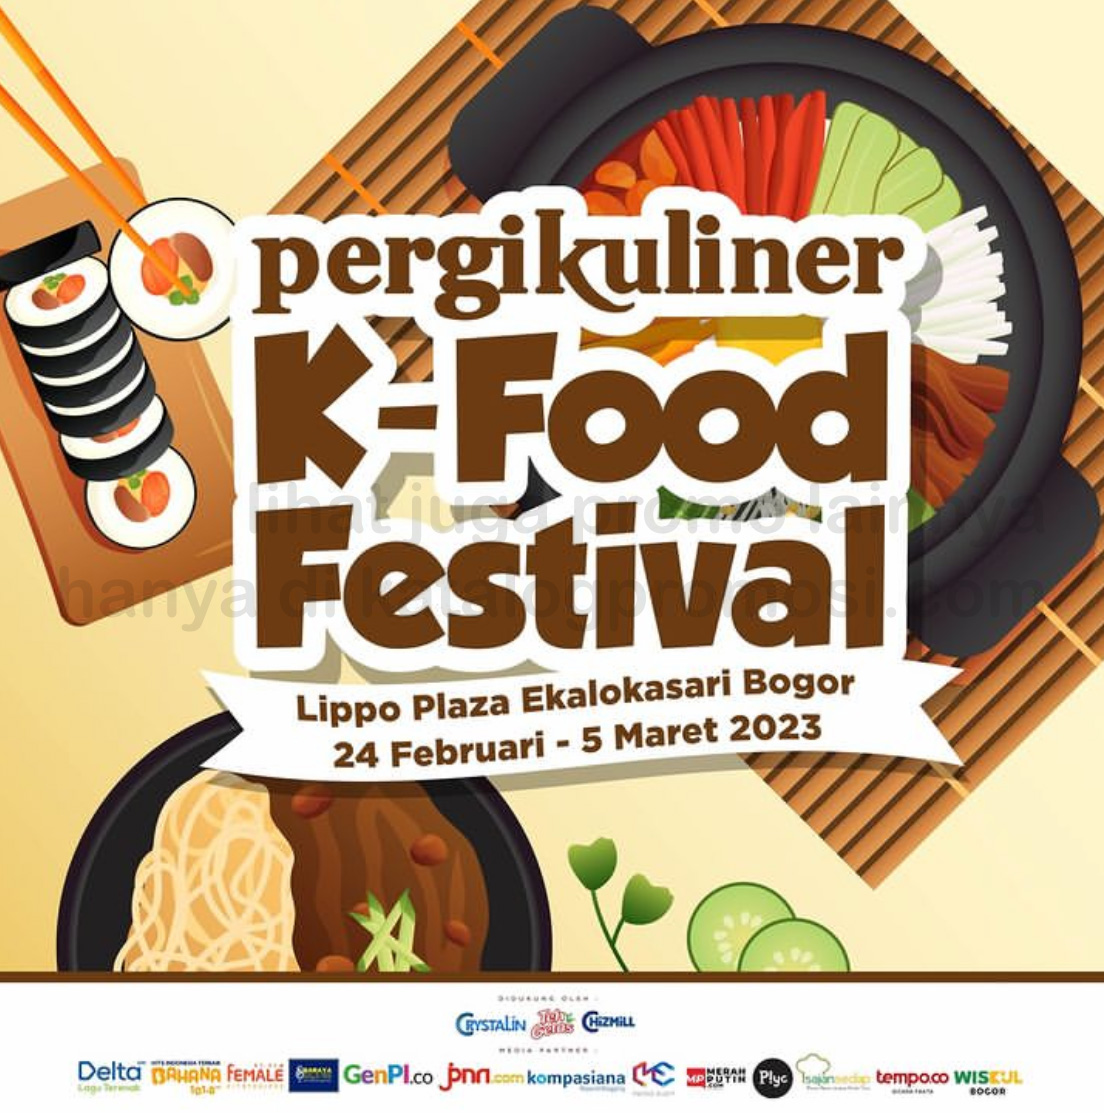 PergiKuliner K-Food Festival di Lippo Plaza Ekalokasari Bogor